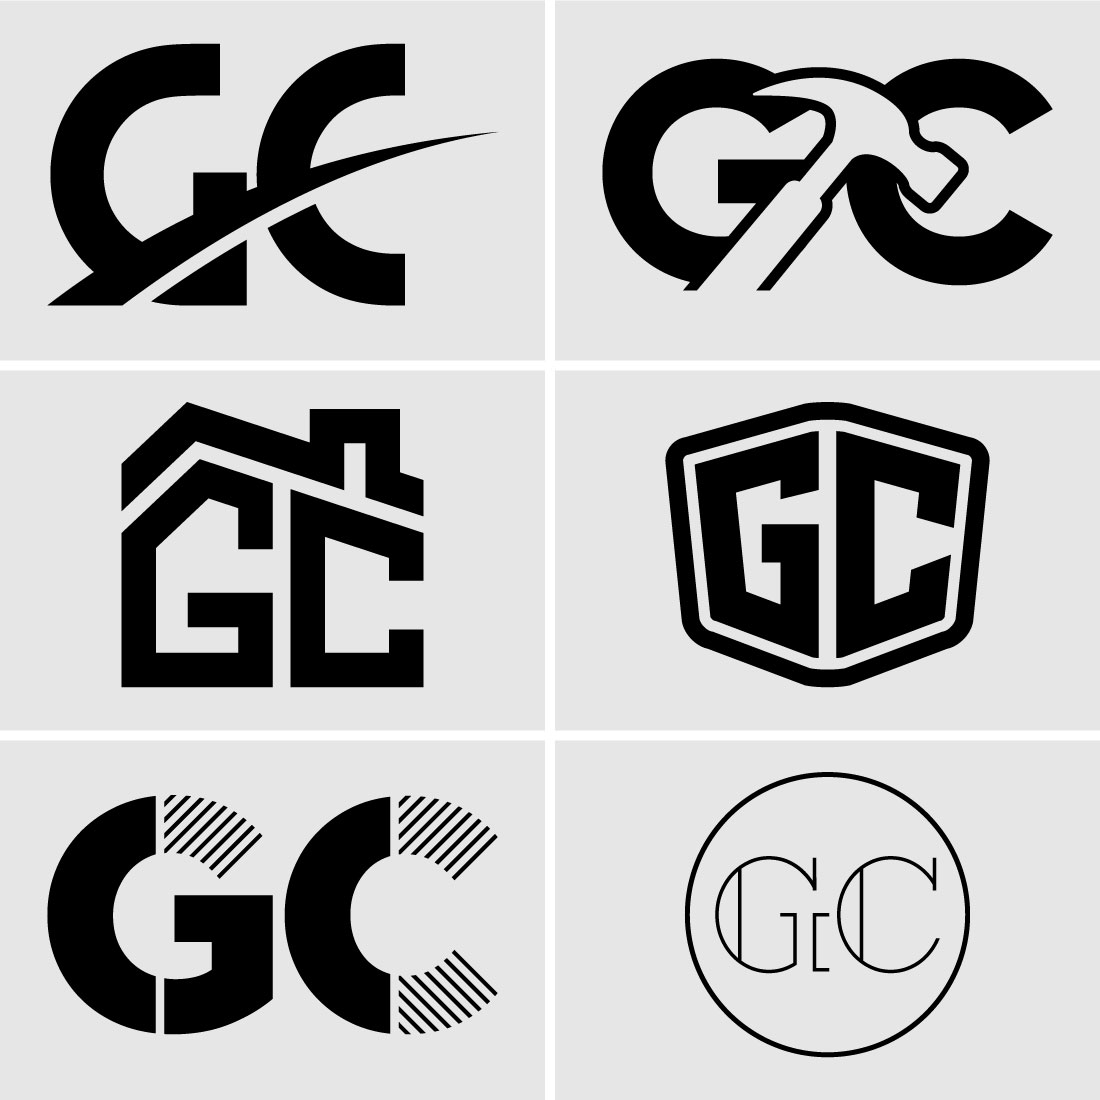 Atlanta Drive GC: Name, logo revealed for indoor golf league team